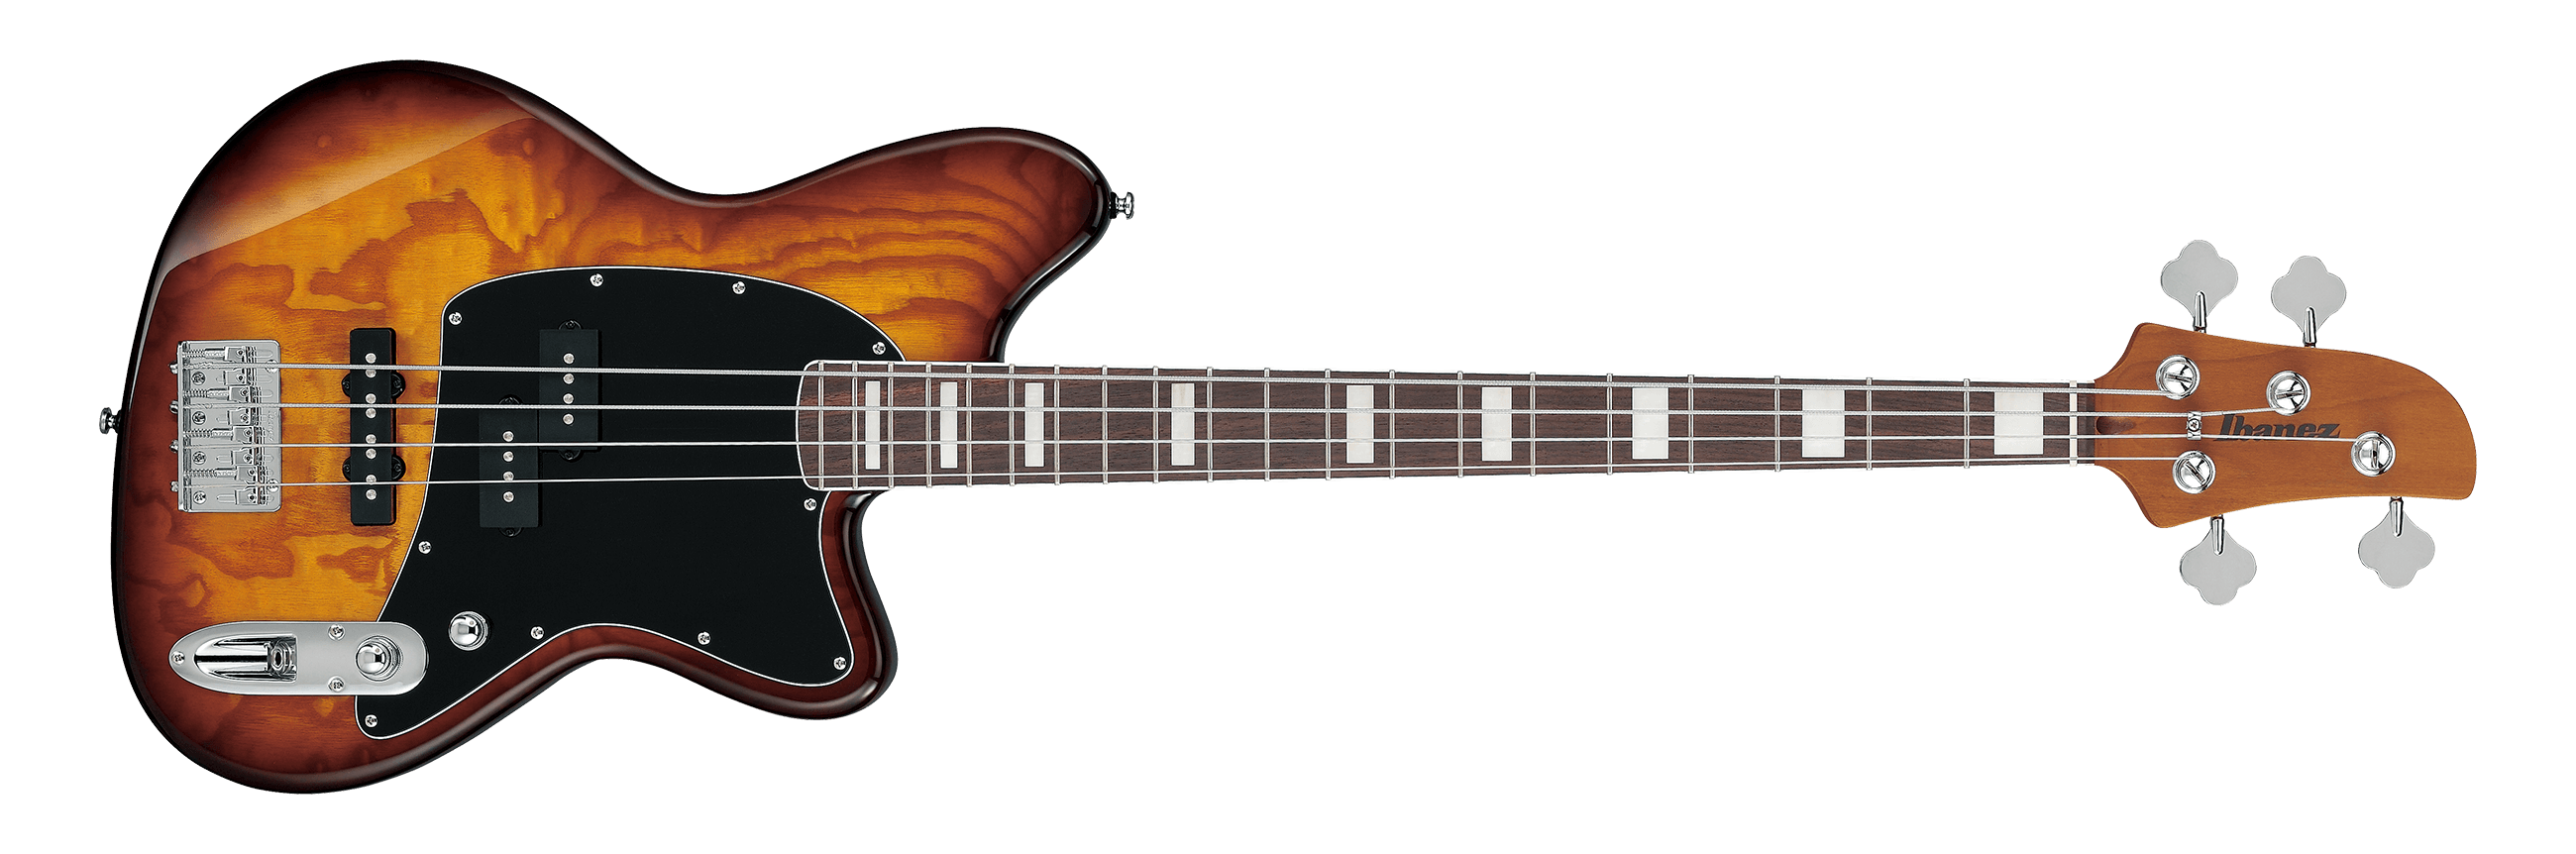 Ibanez TMB400TA Bass Guitar - Iced Americano Burst